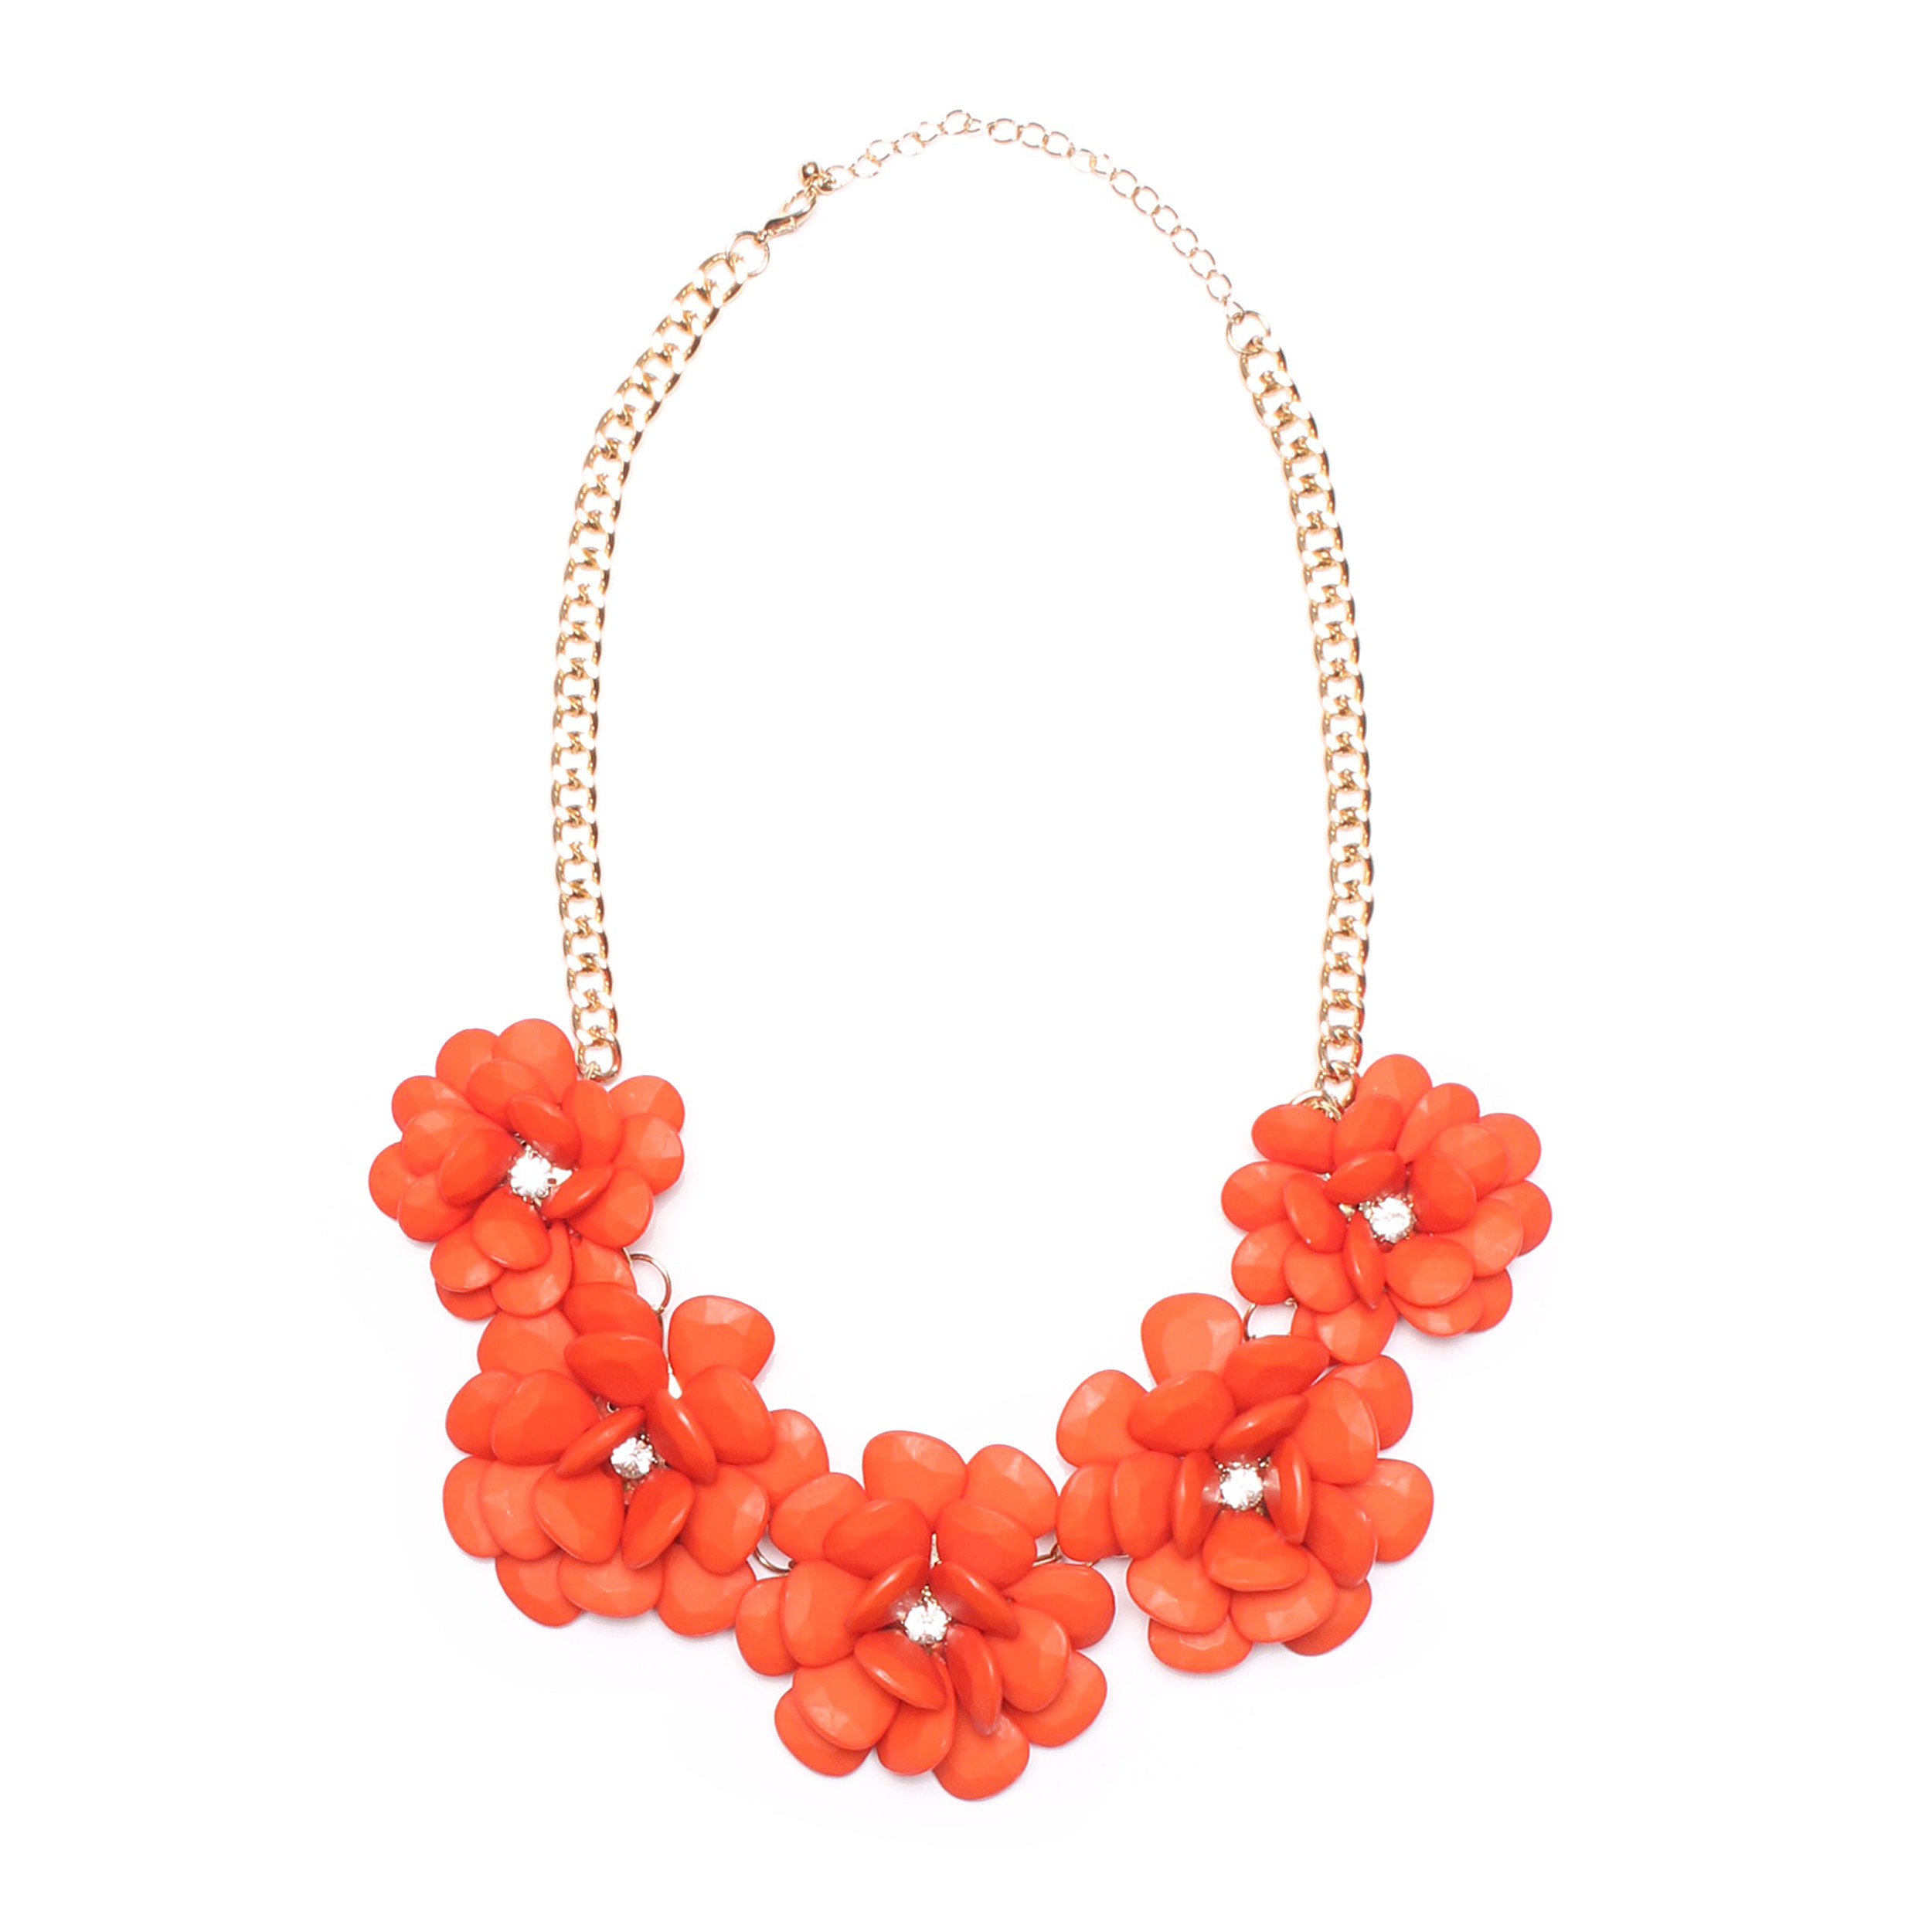 Floral Brights Necklace coral $24-99 - Gurlinterrupted